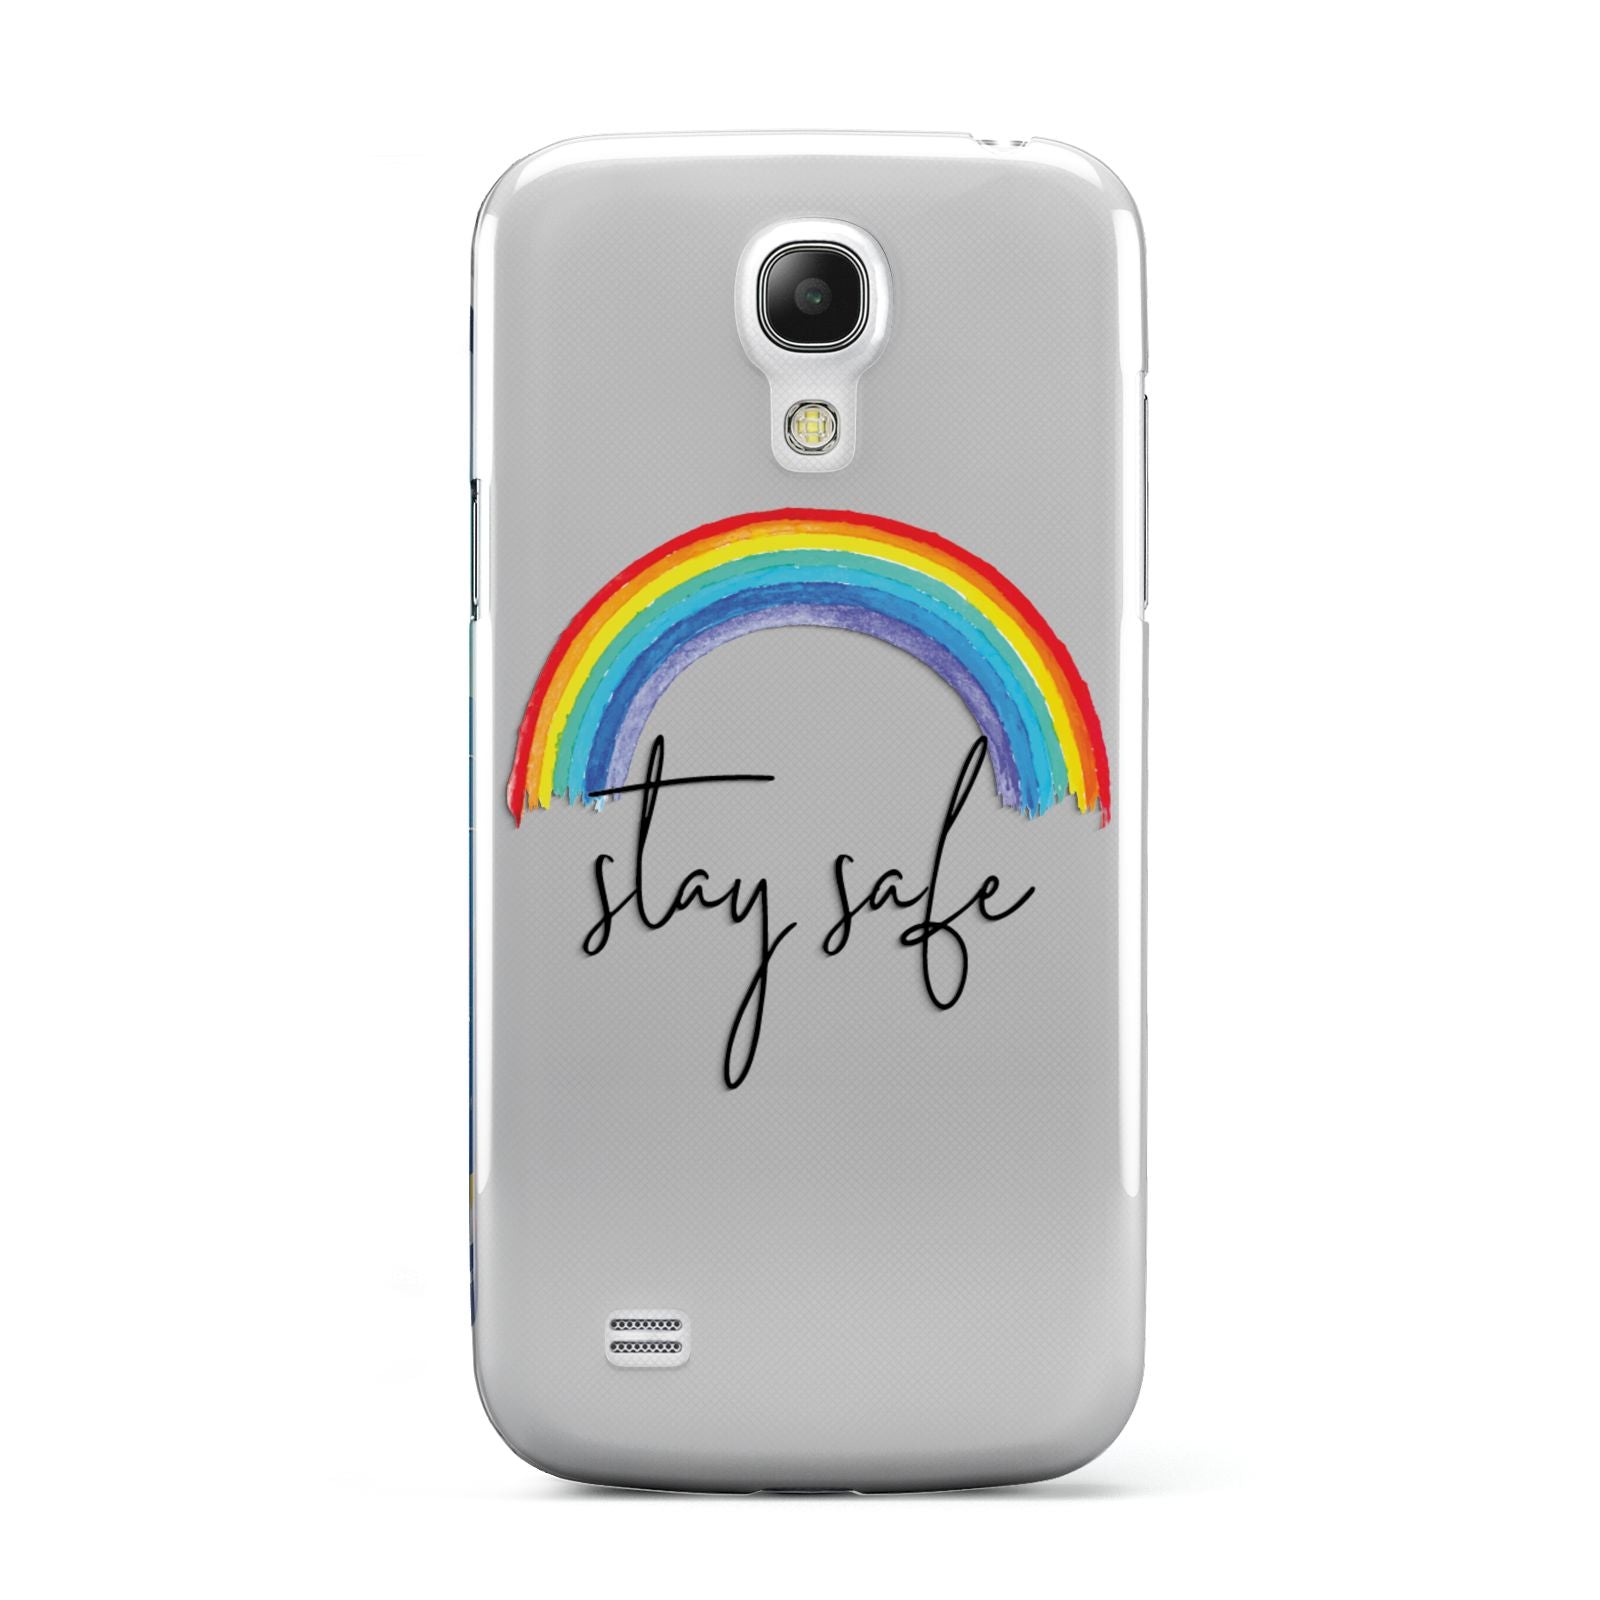 Stay Safe Rainbow Samsung Galaxy S4 Mini Case